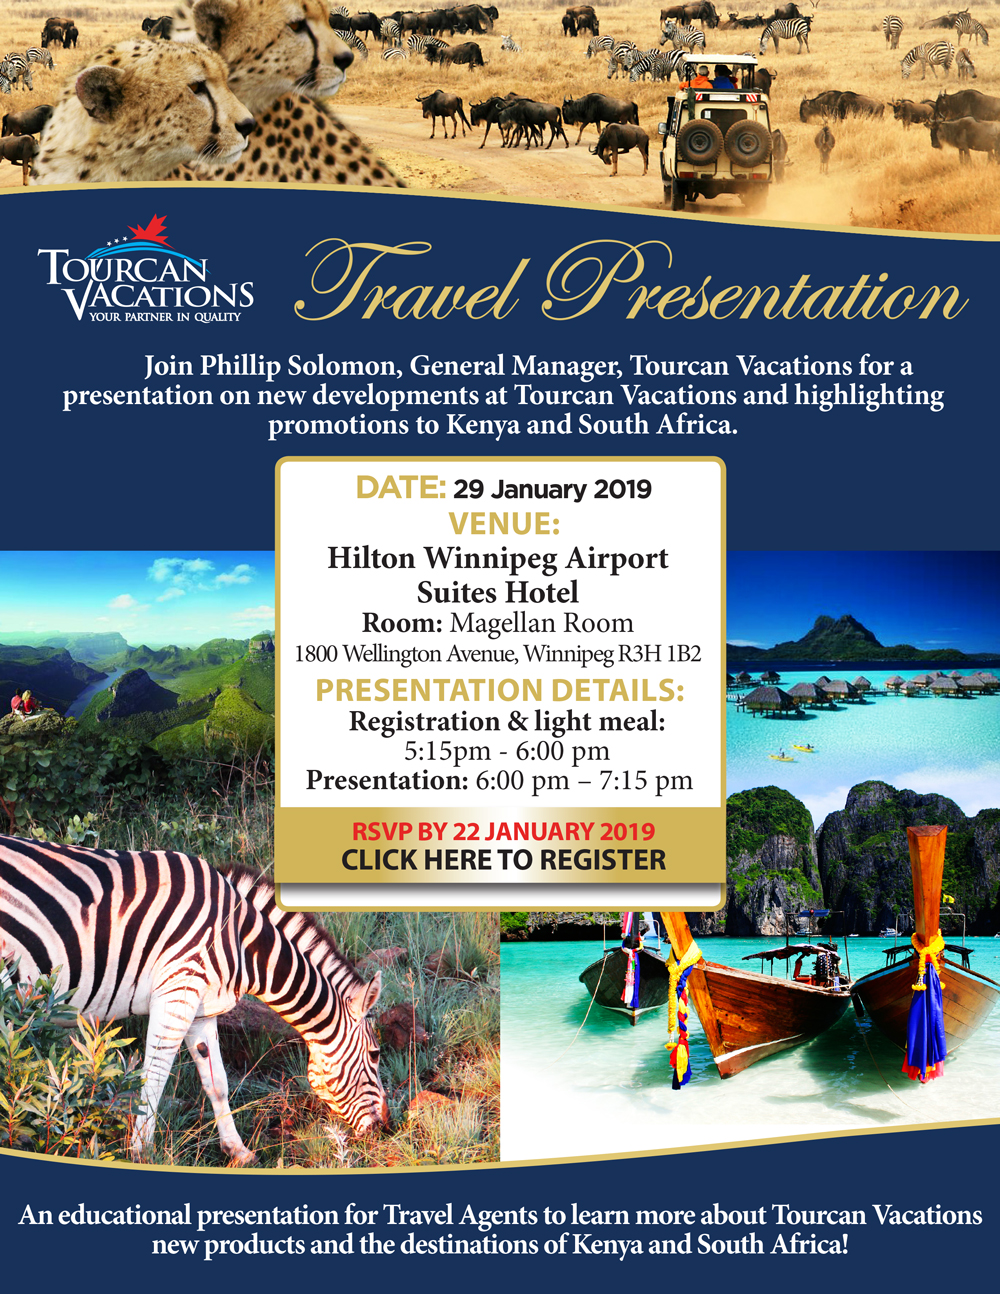 tourcan-2019-travel-presentation-invite-tourcan-vacations-winnipeg